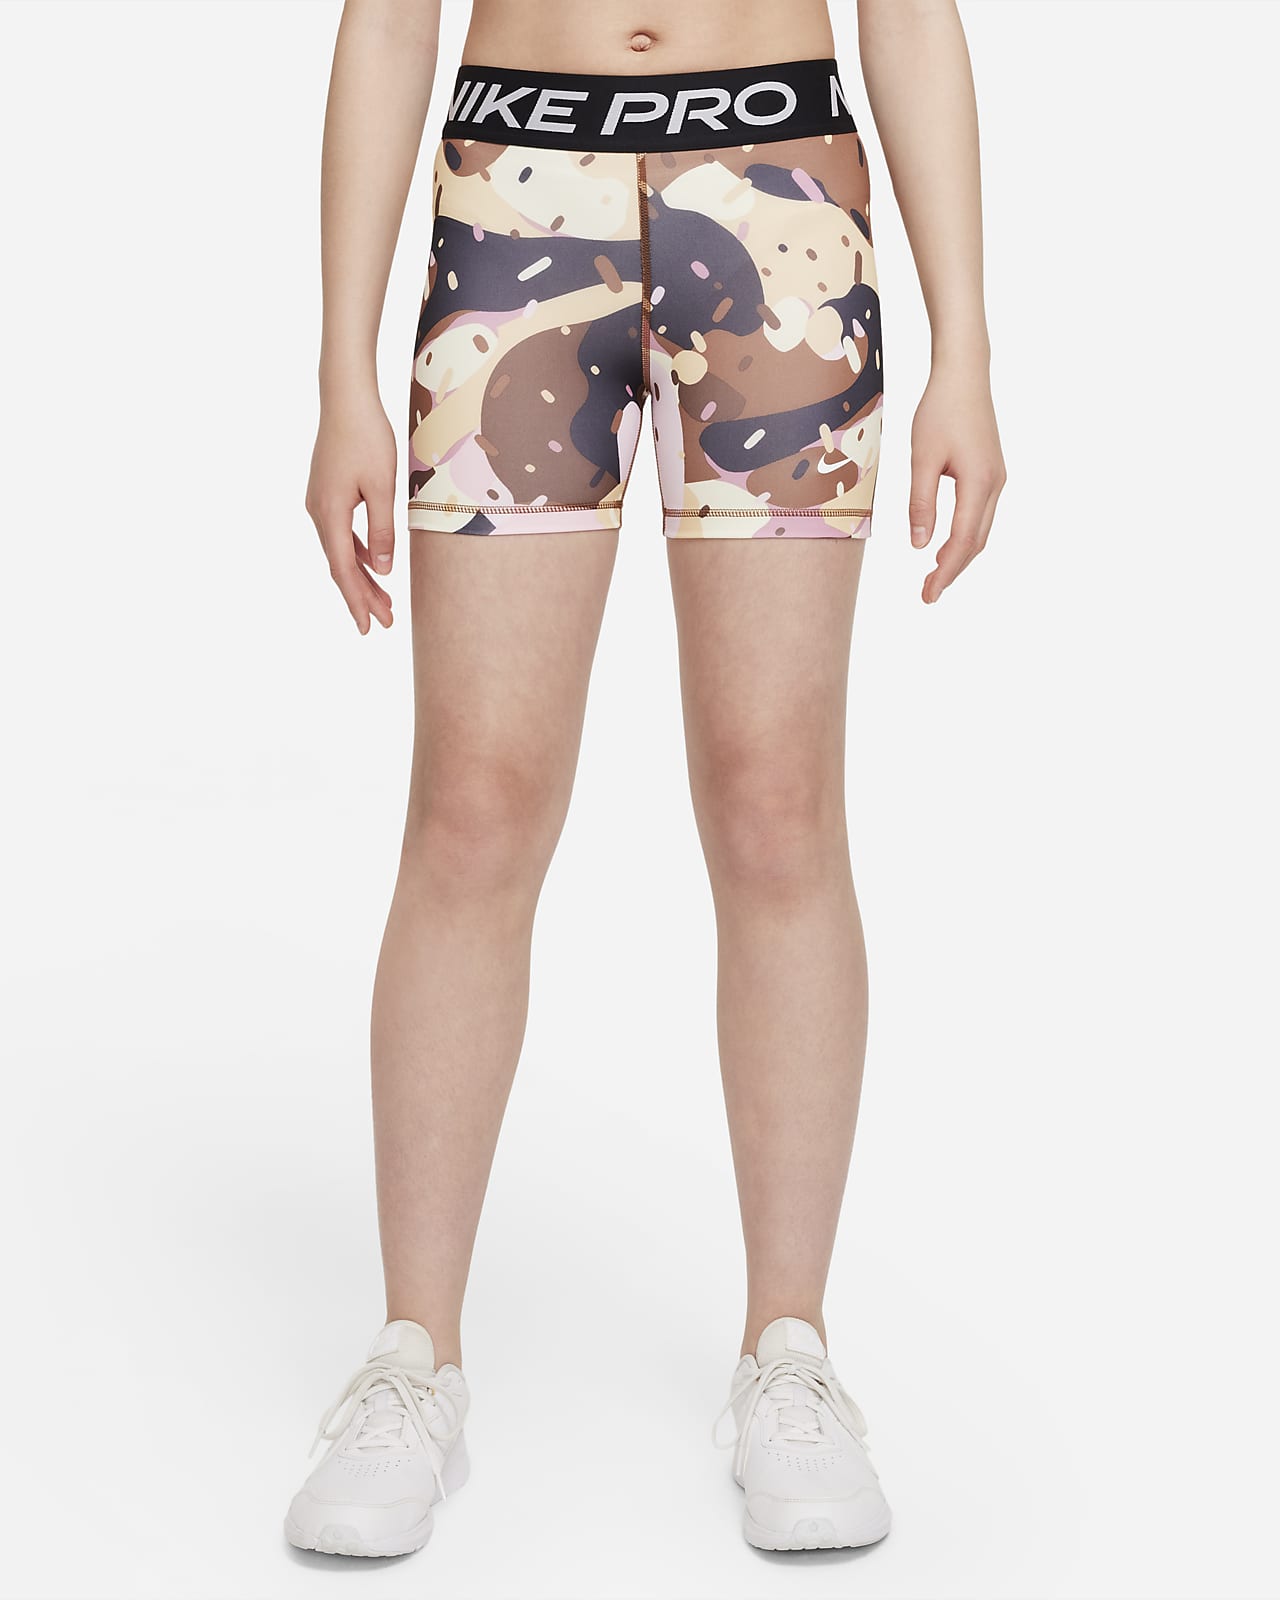 Nike Pro Dri-FIT Older Kids' (Girls') 8cm (approx.) Shorts